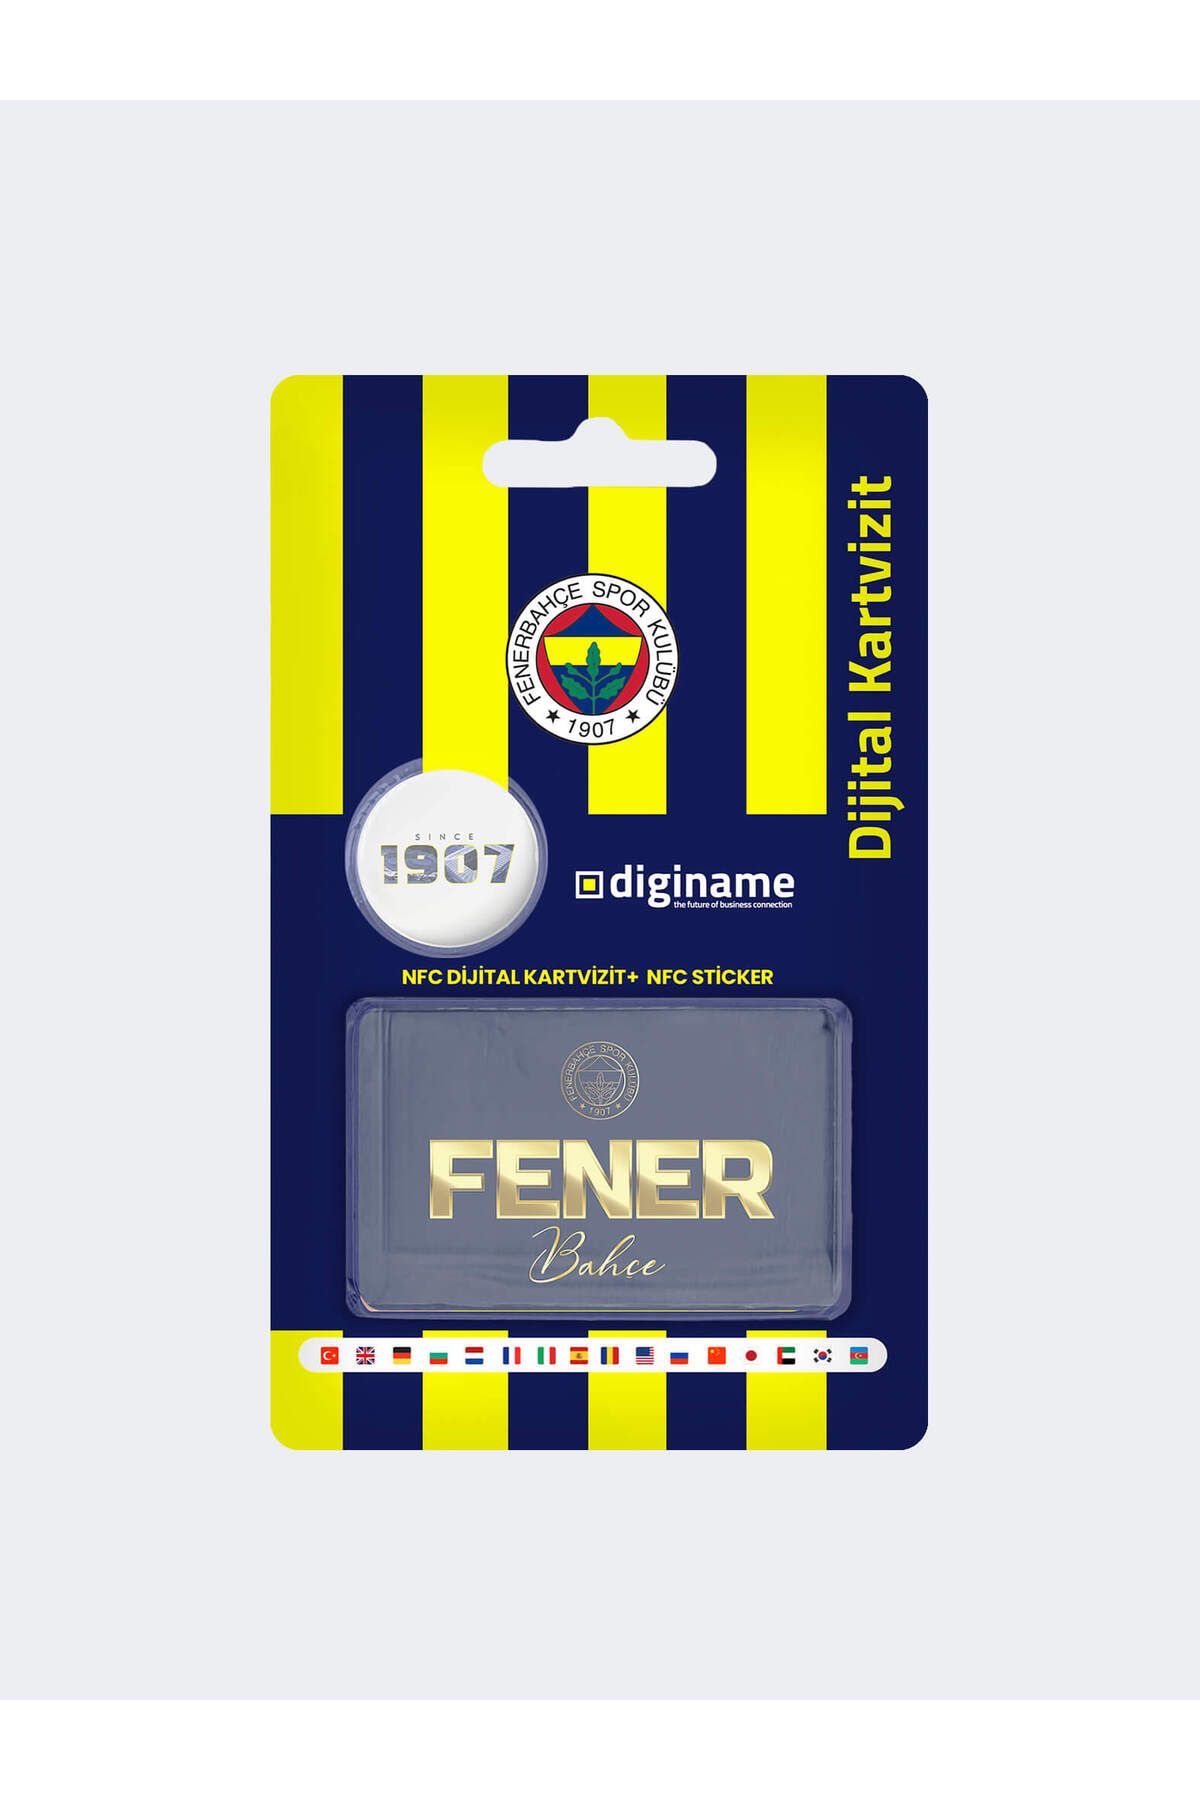 Fenerbahçe FB DIJITAL KARTVIZIT İKILI  NFC QR TE